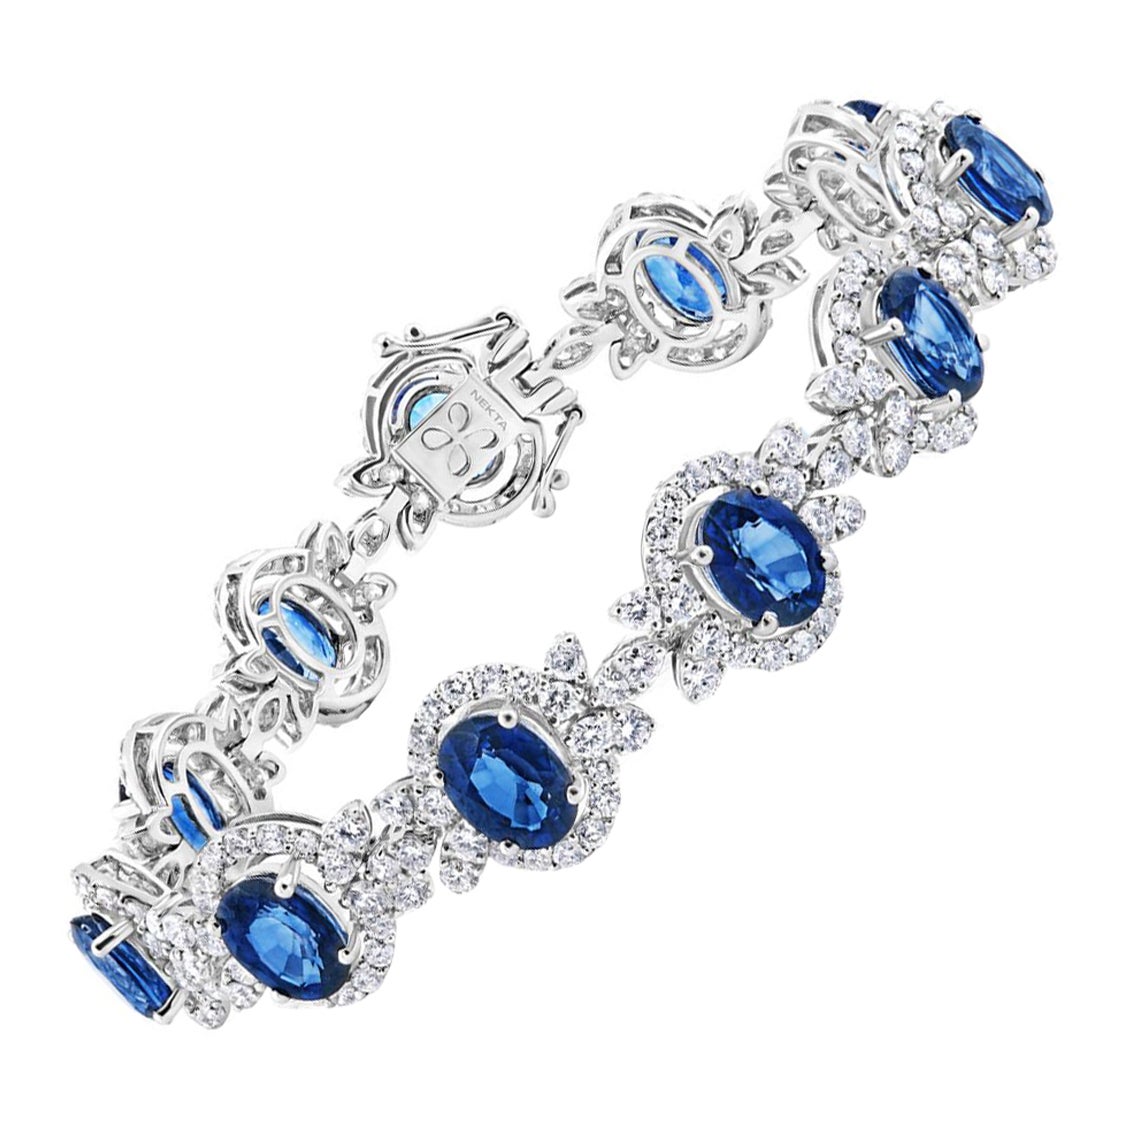 25 Carats Oval Cut J'adore Blue Sapphire & Diamond Bracelet Certified For Sale